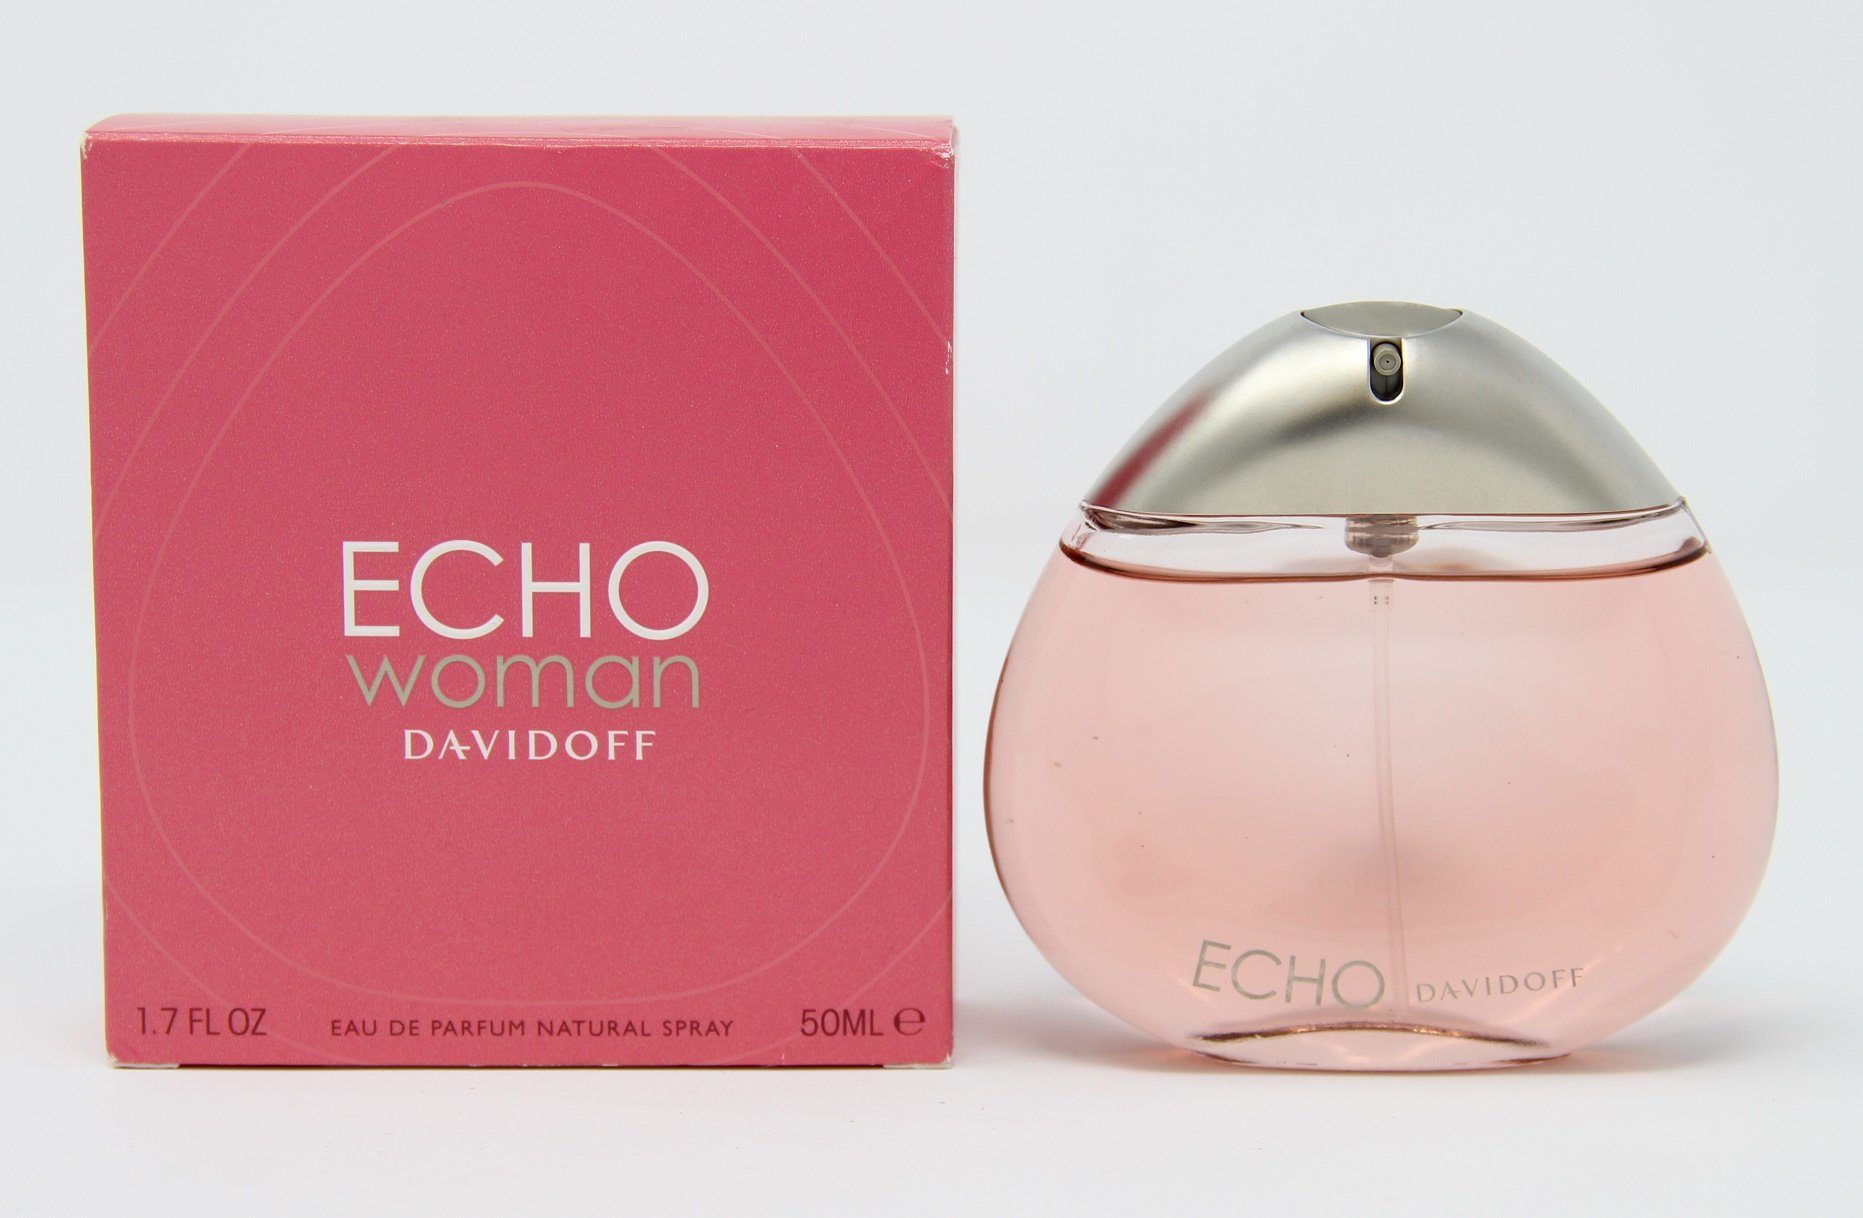 Parfum Davidoff Spray 50ml Eau Woman de Parfum de Eau Echo DAVIDOFF